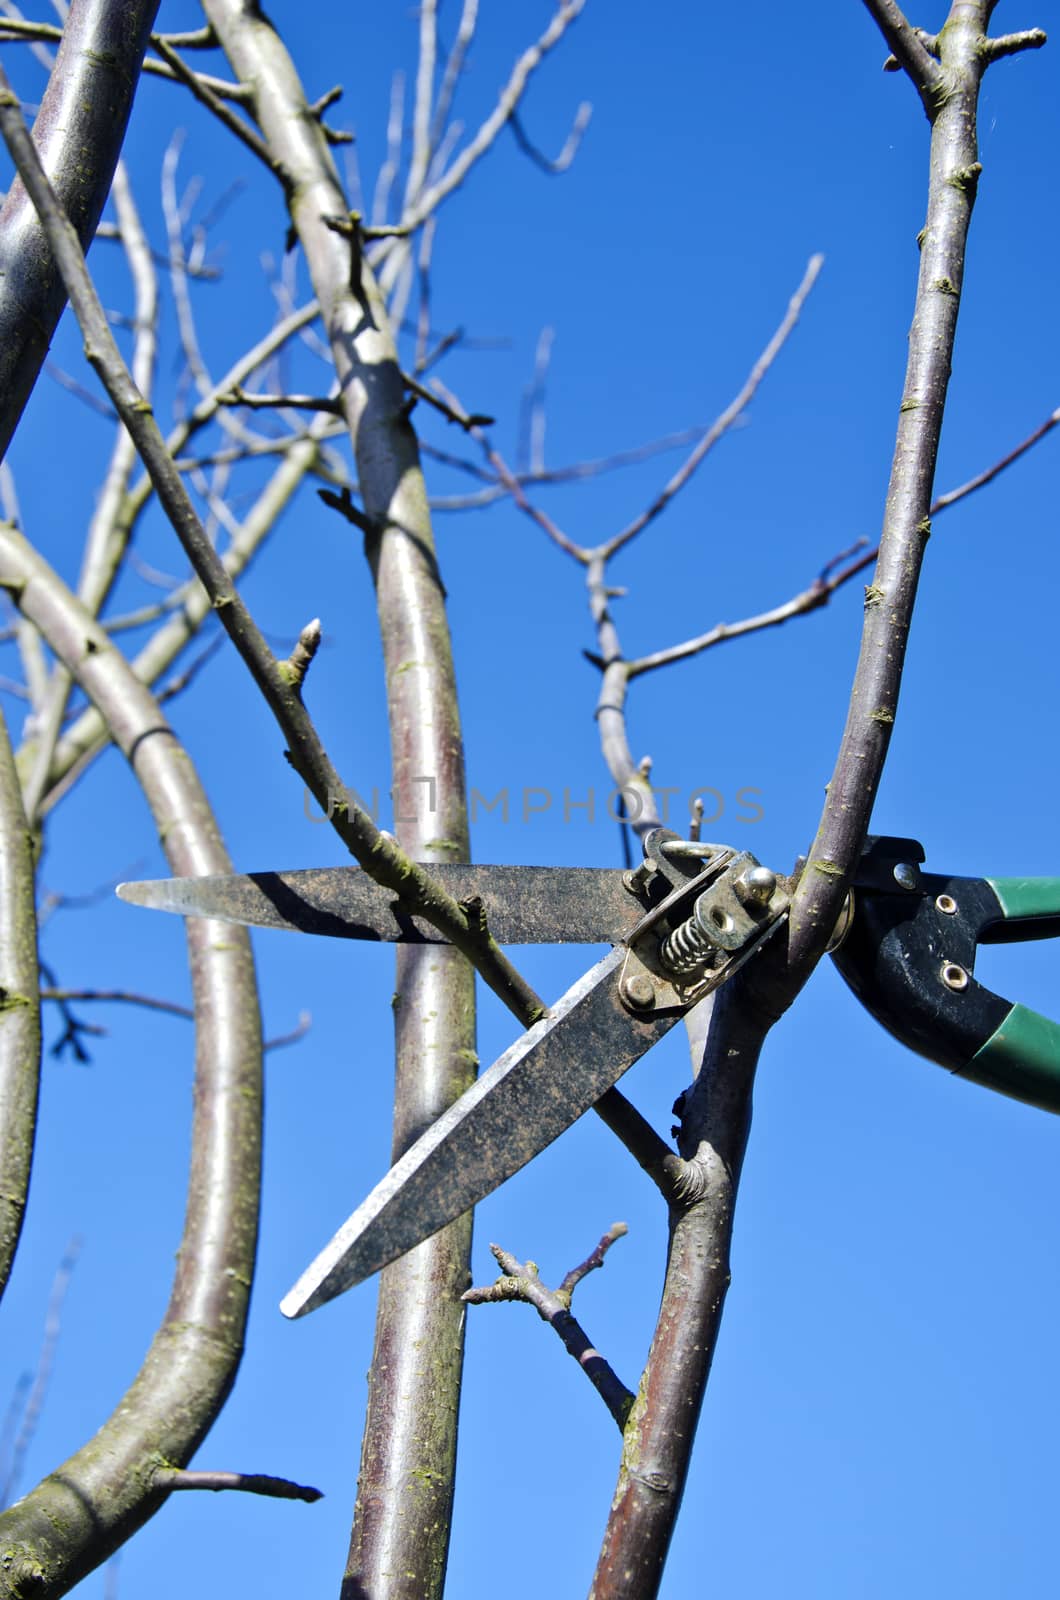 Pruning shears hanged in apple tree in spring  by alis_photo